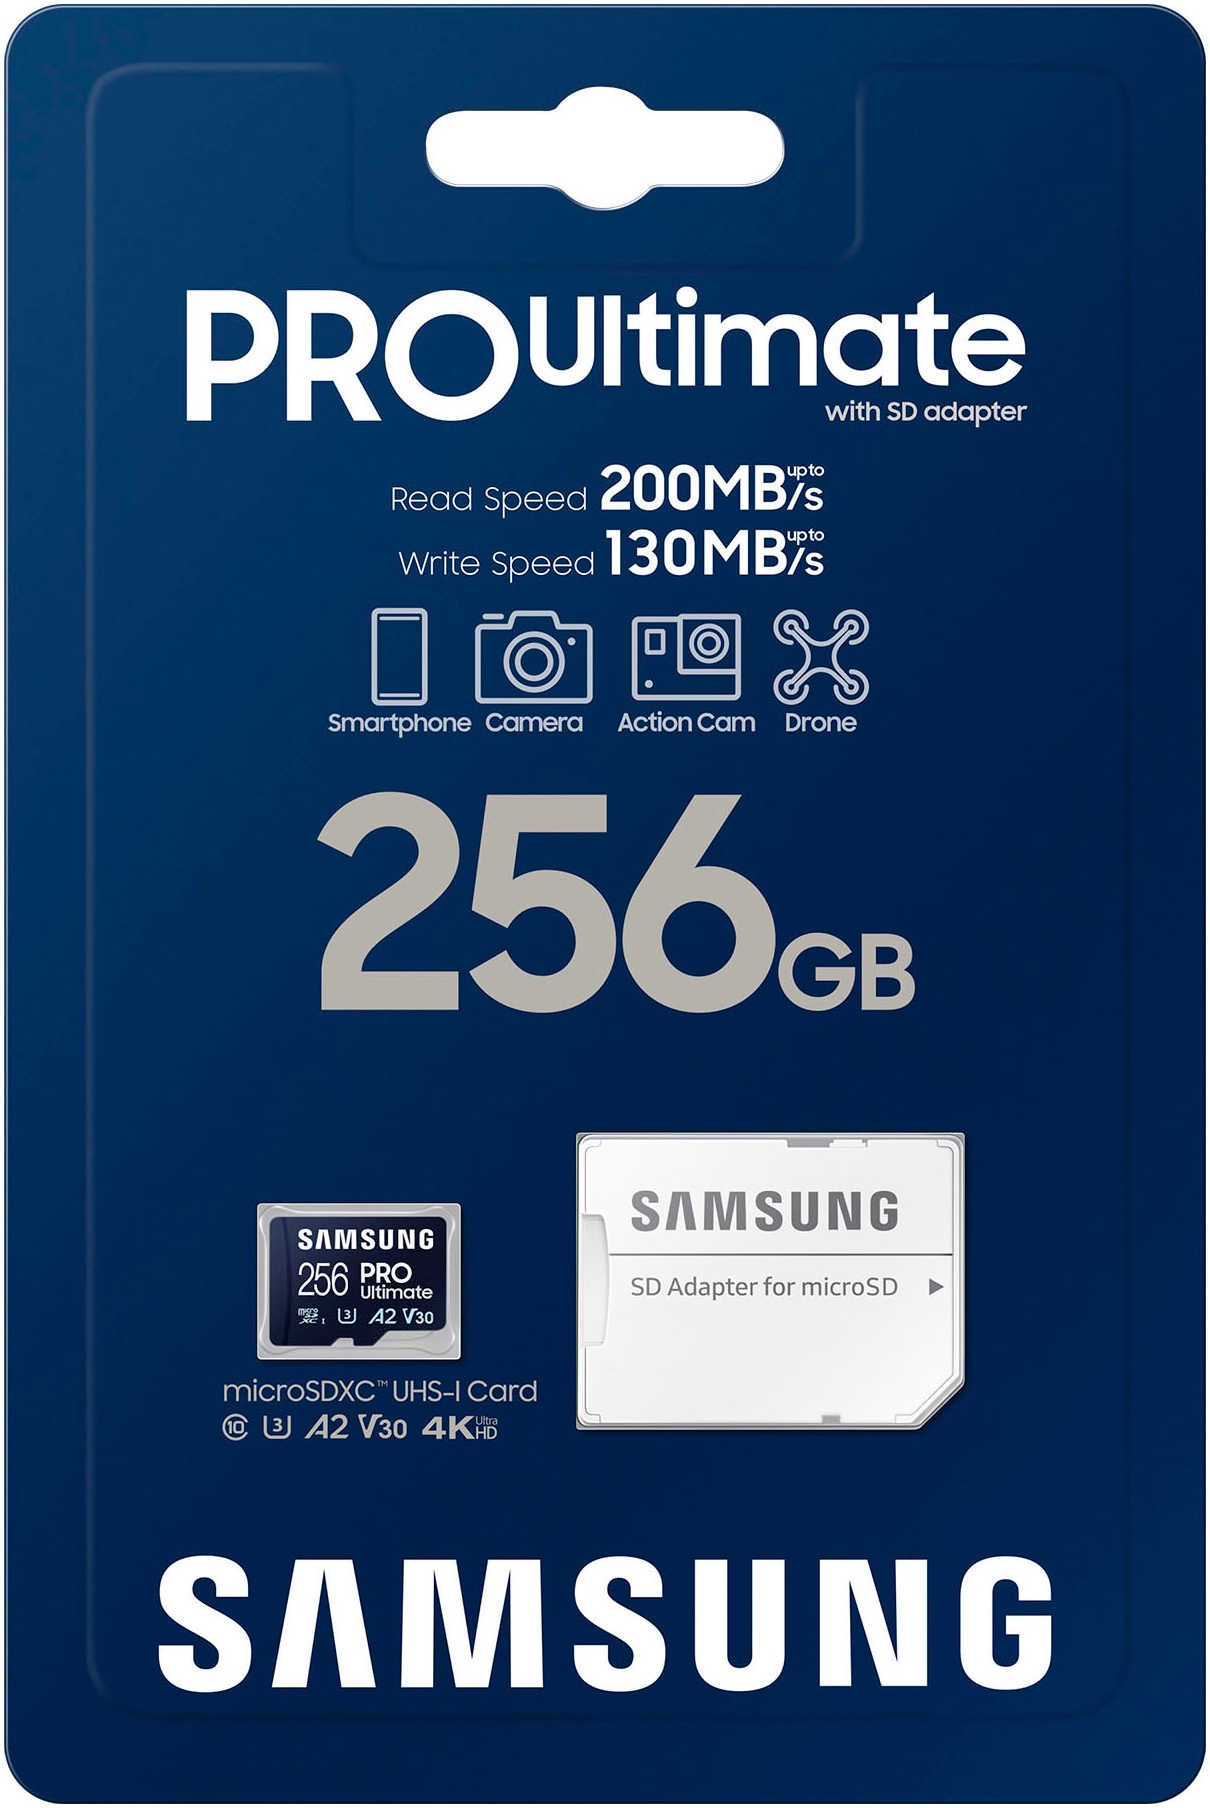 Samsung Speicherkarte »Pro Ultimate 128 GB«, (Video Speed Class 30 (V30)/UHS Speed Class 3 (U3) 200 MB/s Lesegeschwindigkeit)